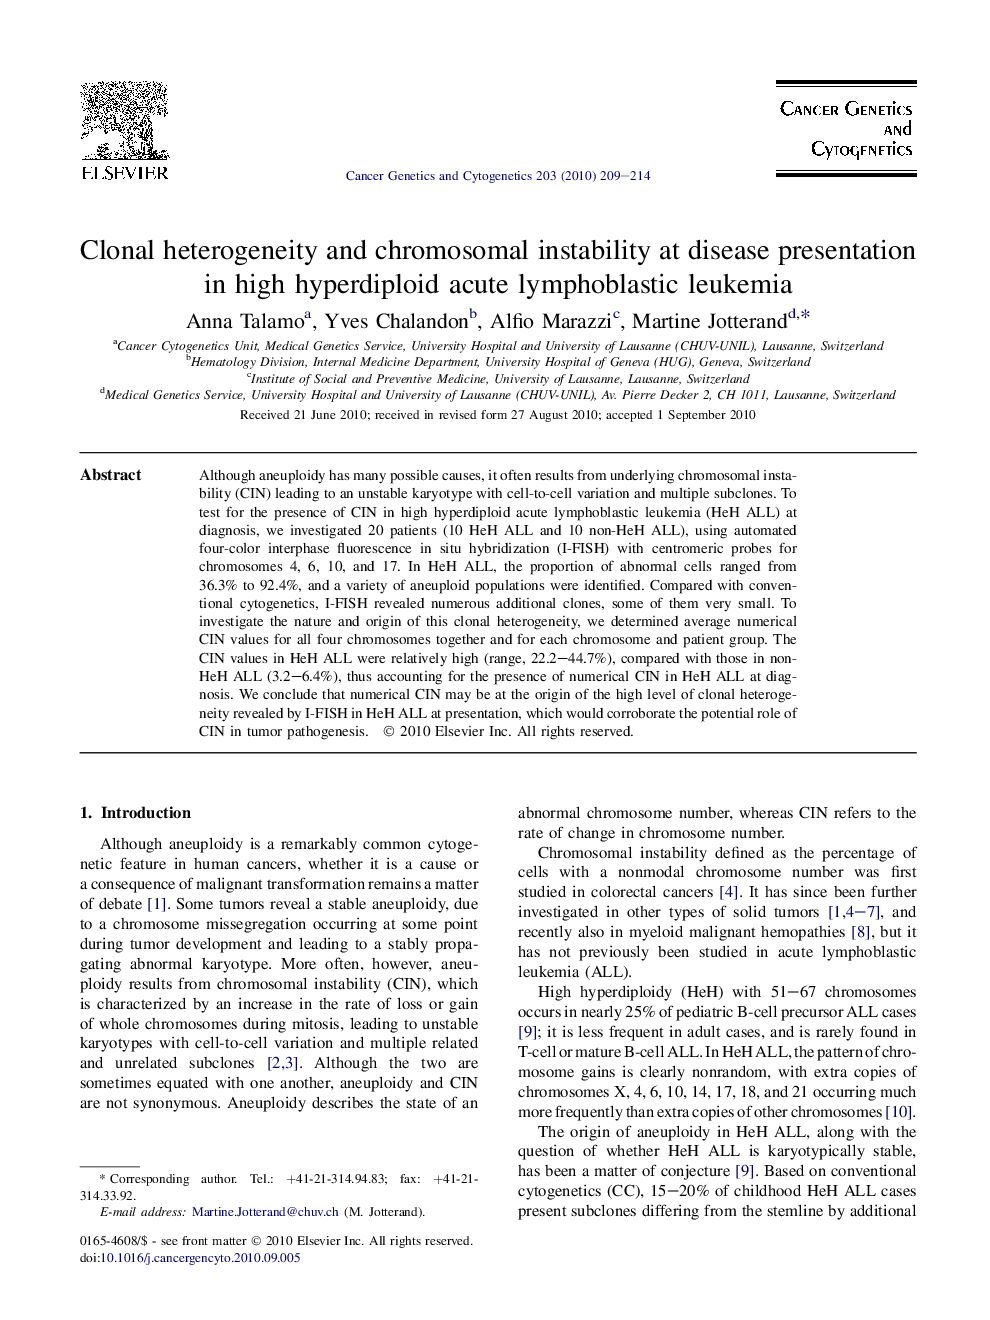 Clonal heterogeneity and chromosomal instability at disease presentation in high hyperdiploid acute lymphoblastic leukemia